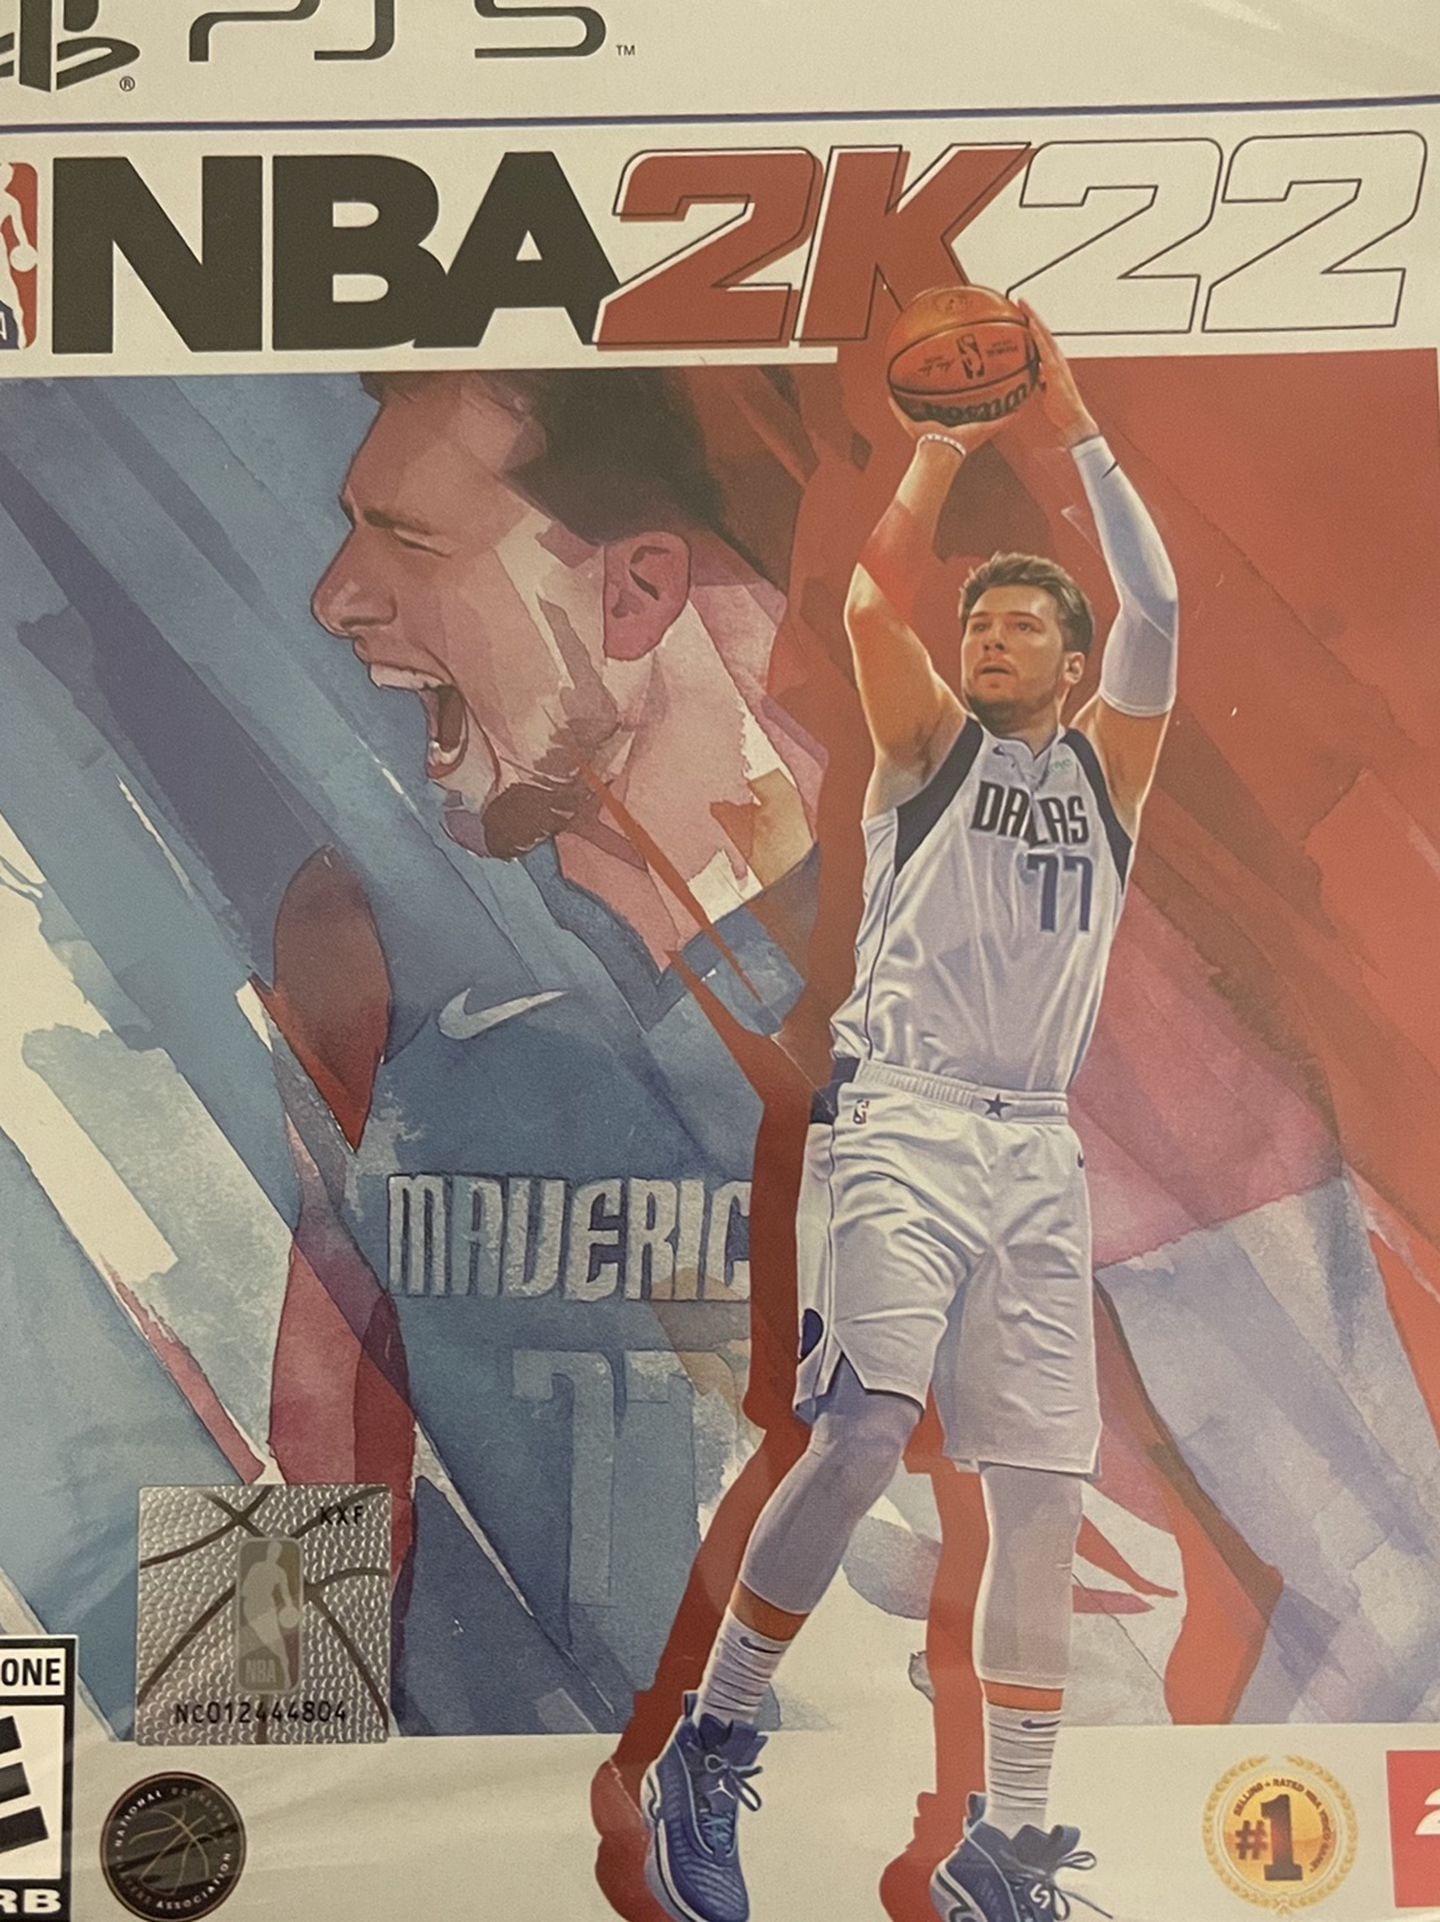 PS5 NBA2K22 Game